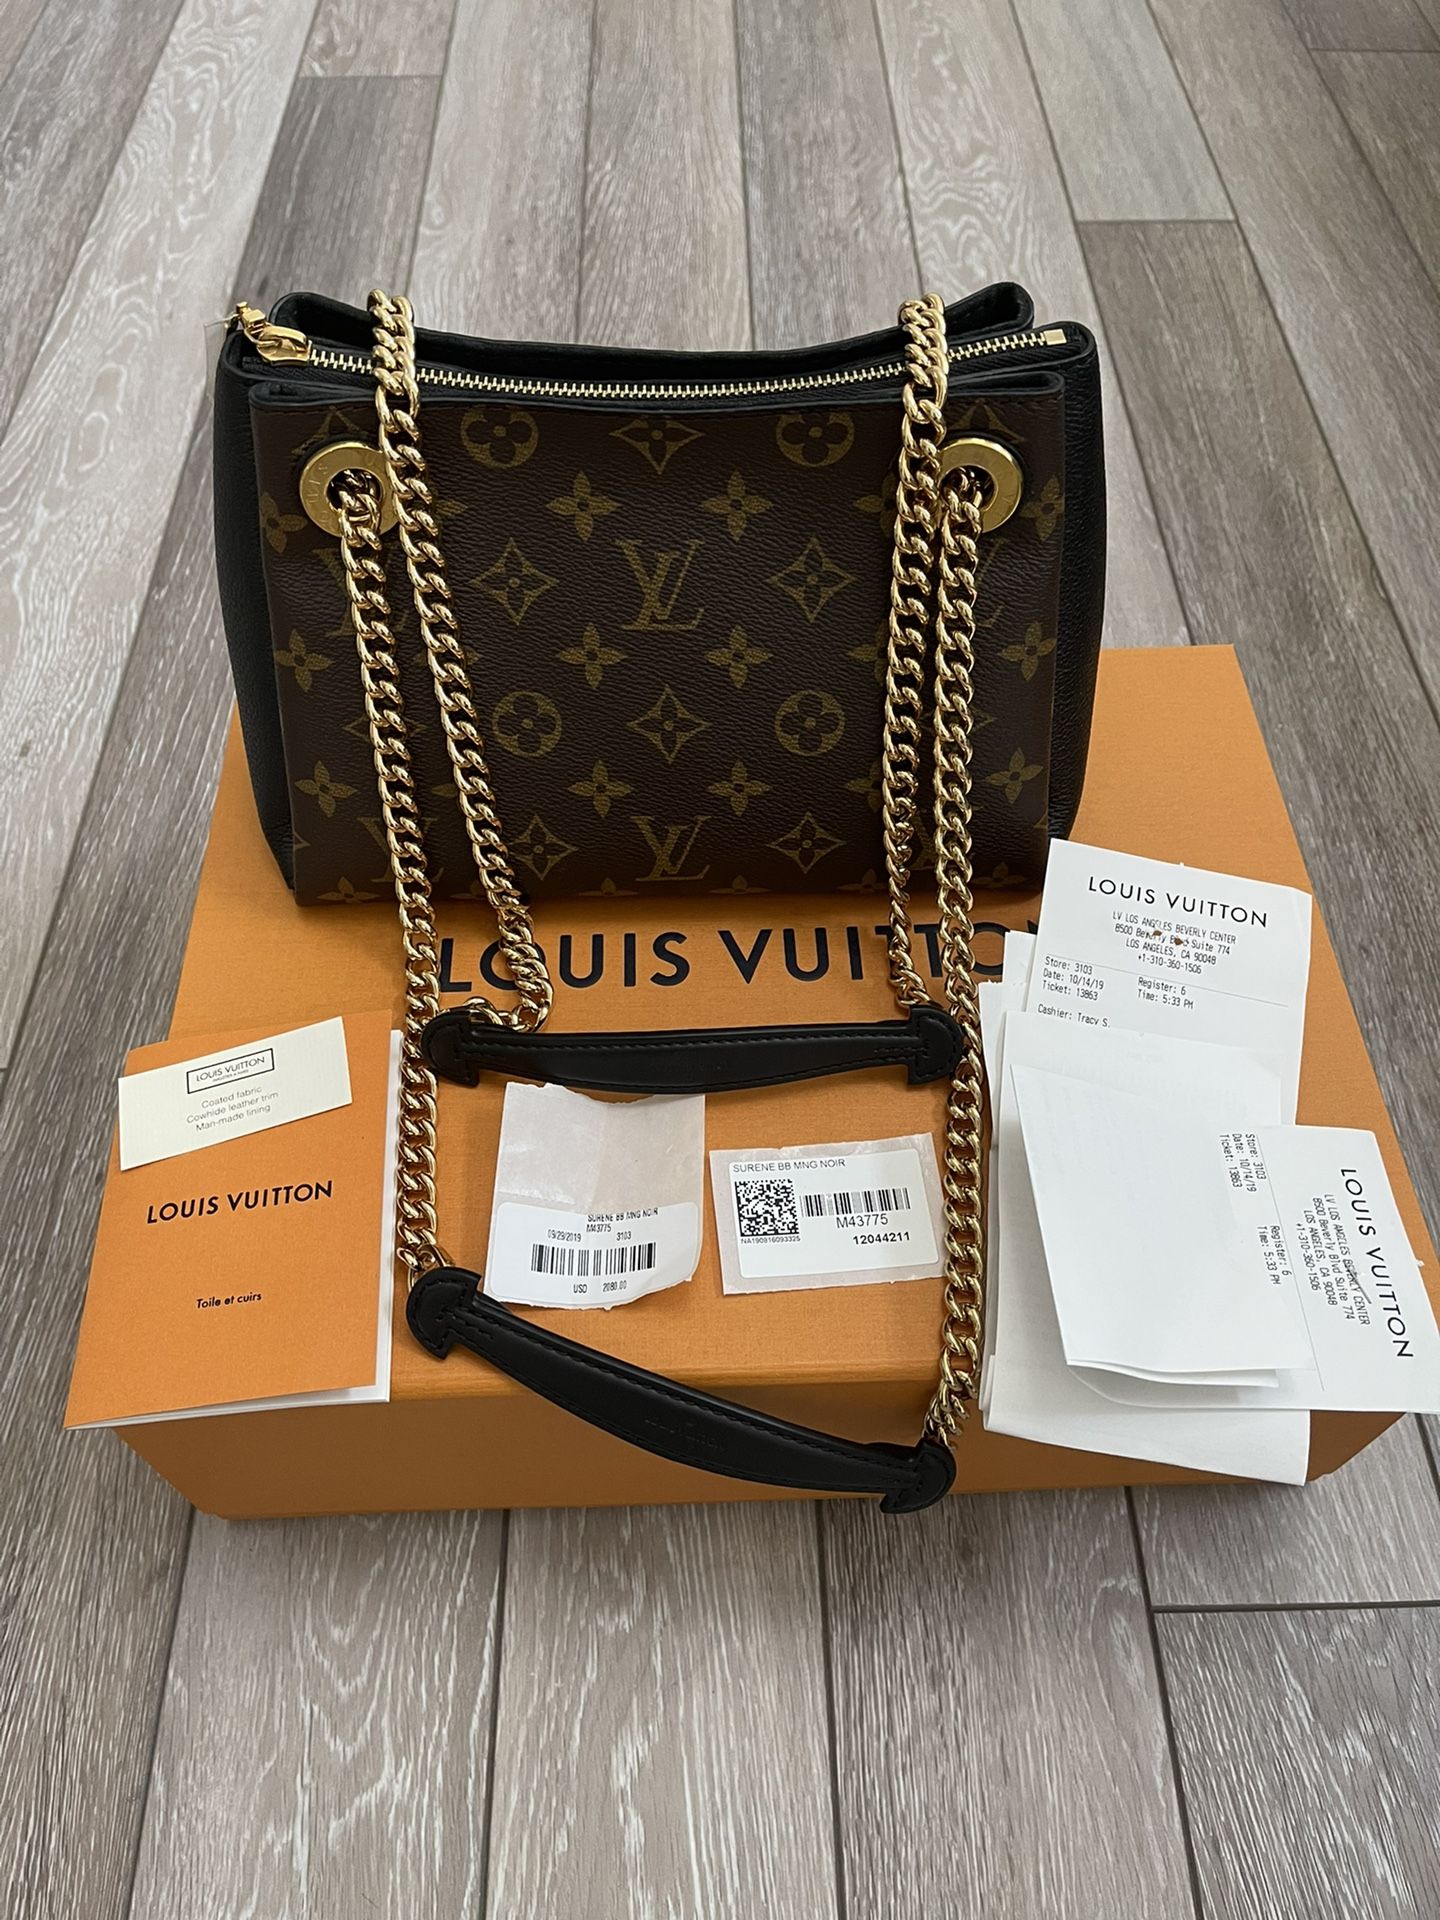 Louis Vuitton Surene Bb for Sale in Renton, WA - OfferUp